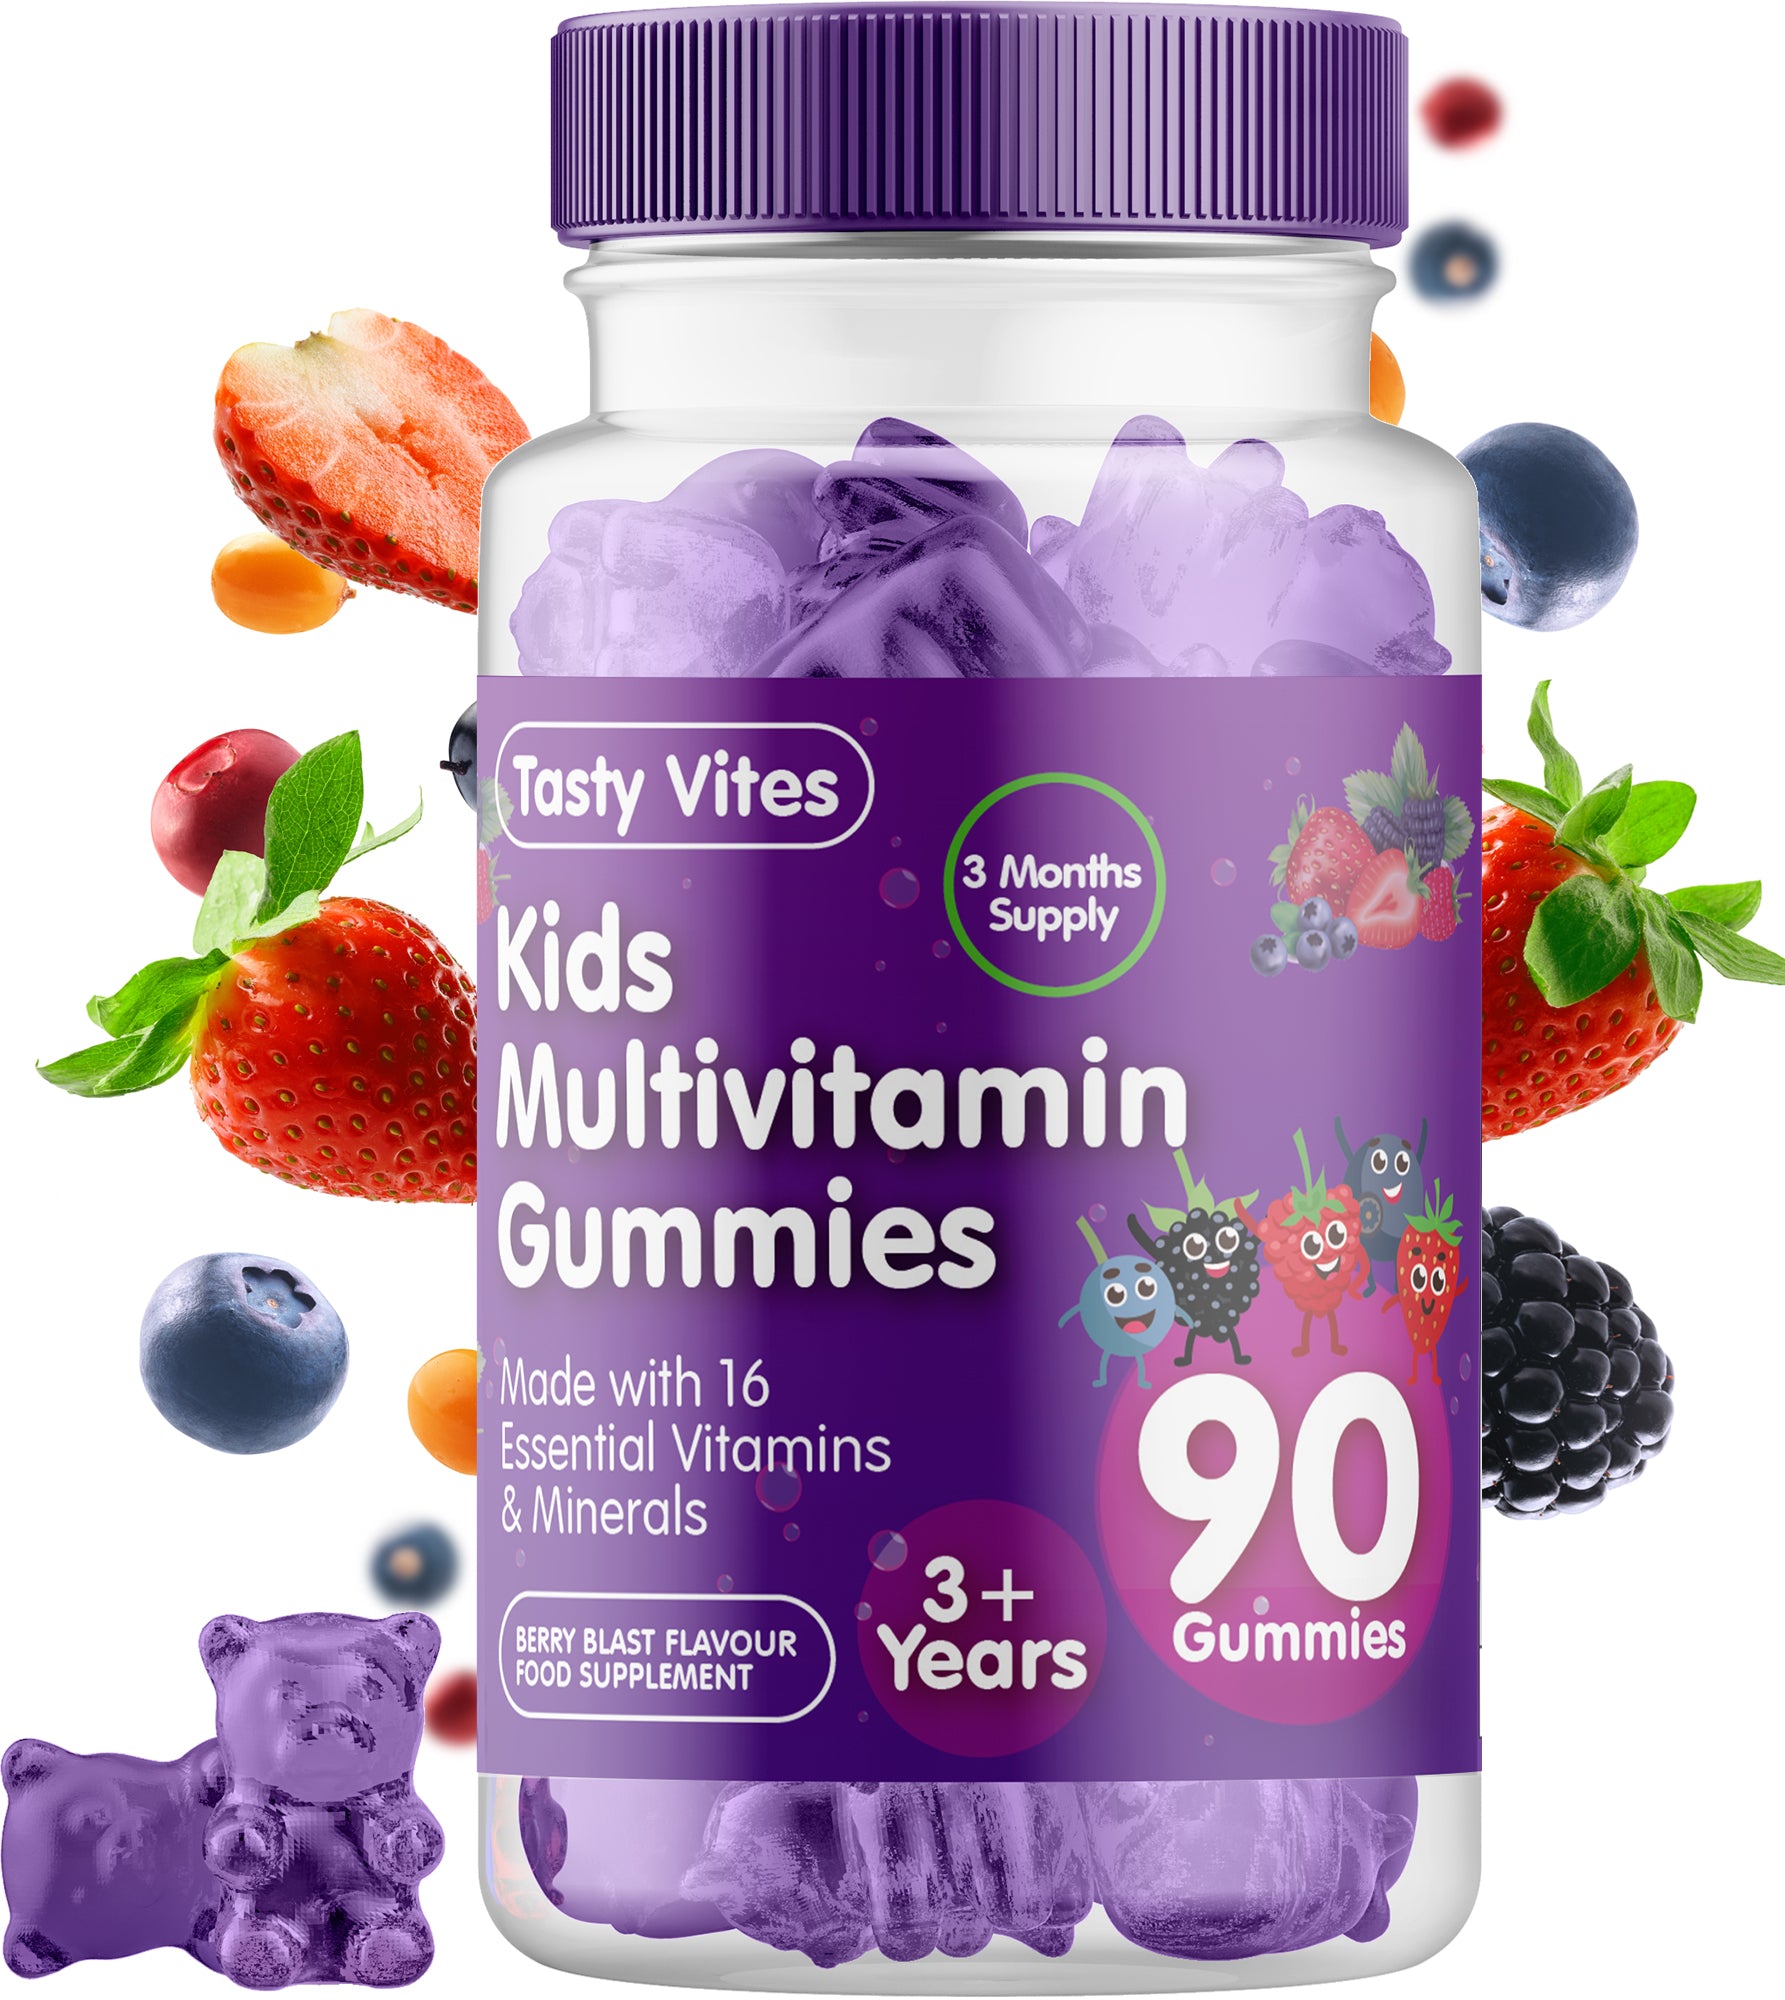 Kids Multivitamin Gummies - Berry Blast Flavour - With Vitamin A, C, D3, B6, B12, E, K, Biotin, Zinc & more